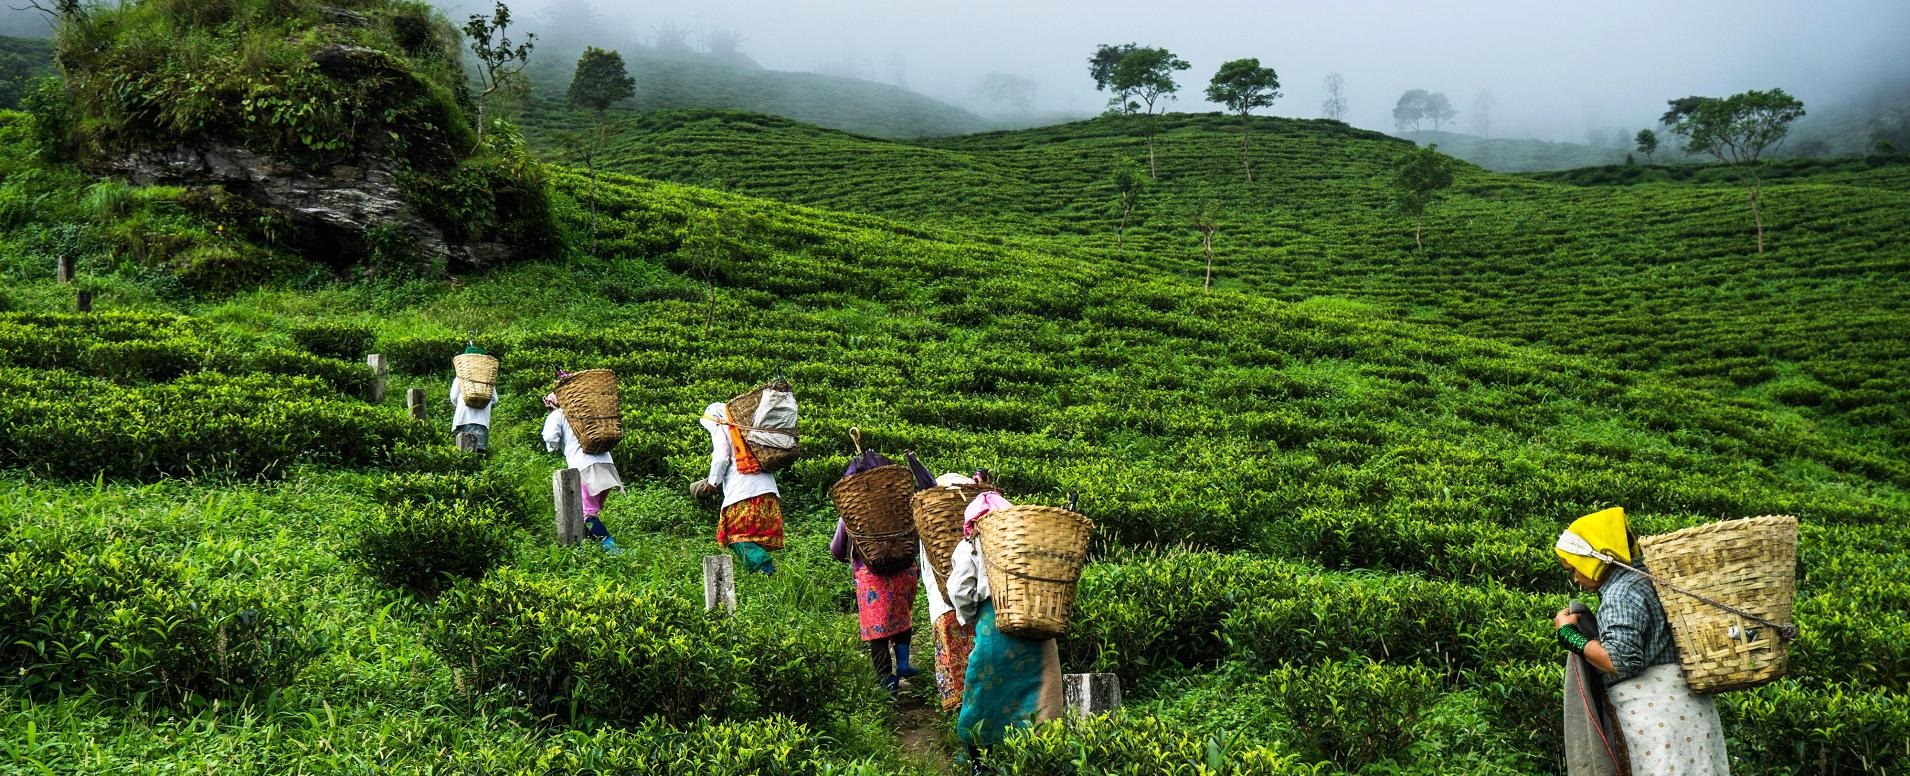  Darjeeling – Tea plantations to splendid views